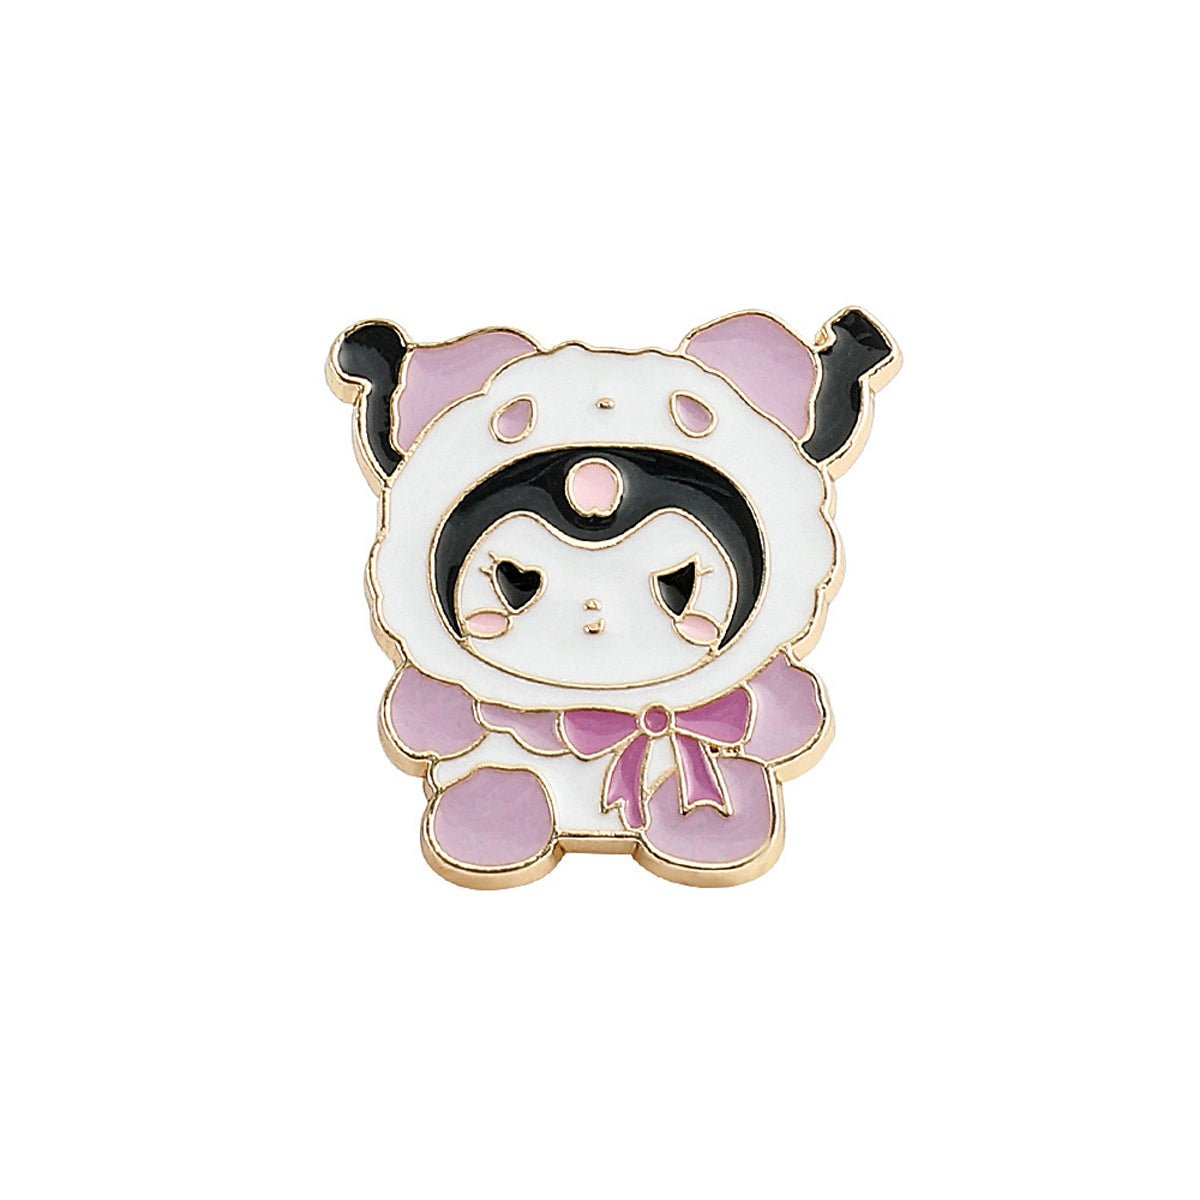 Sanrio Characters Enamel Pins - Hello Kitty, My Melody